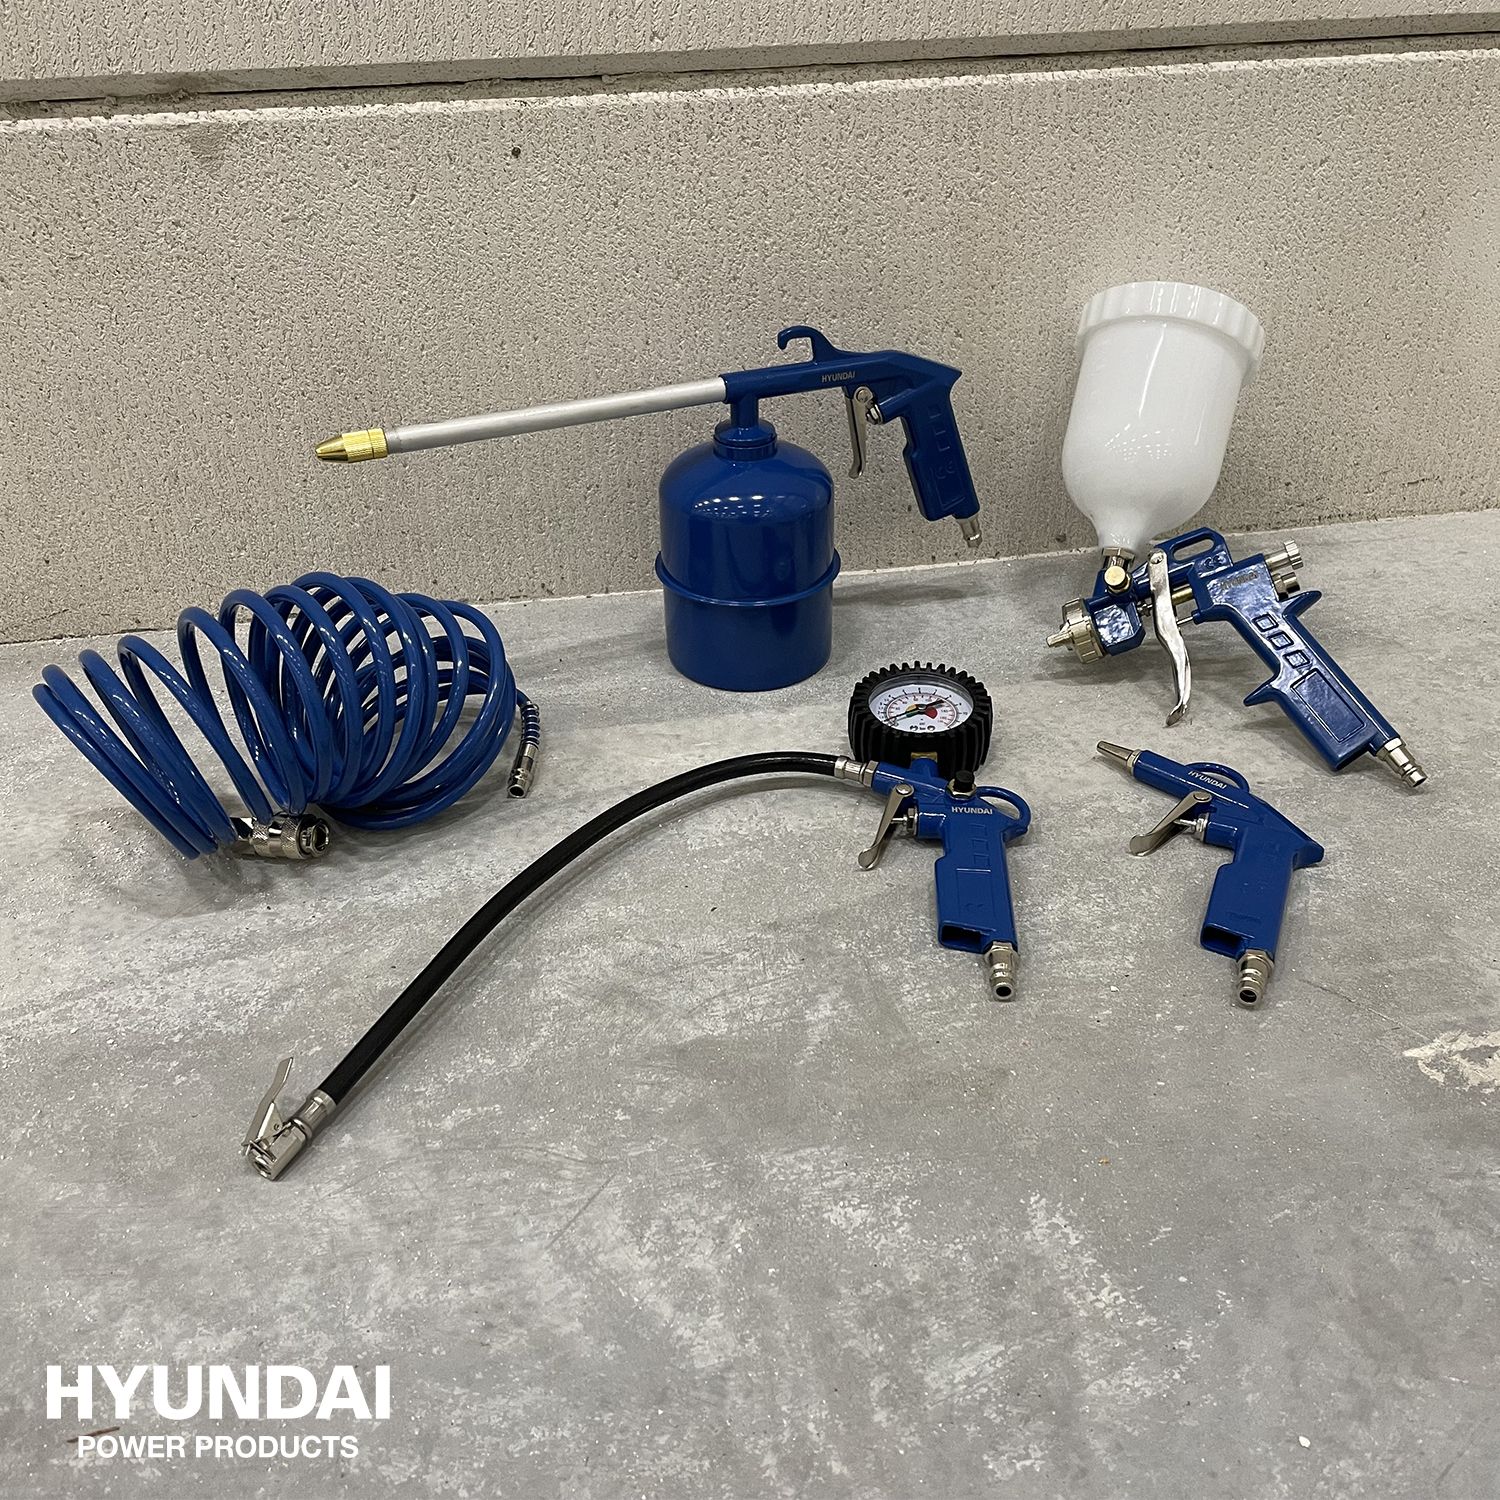 Hyundai compressoraccessoires 5x